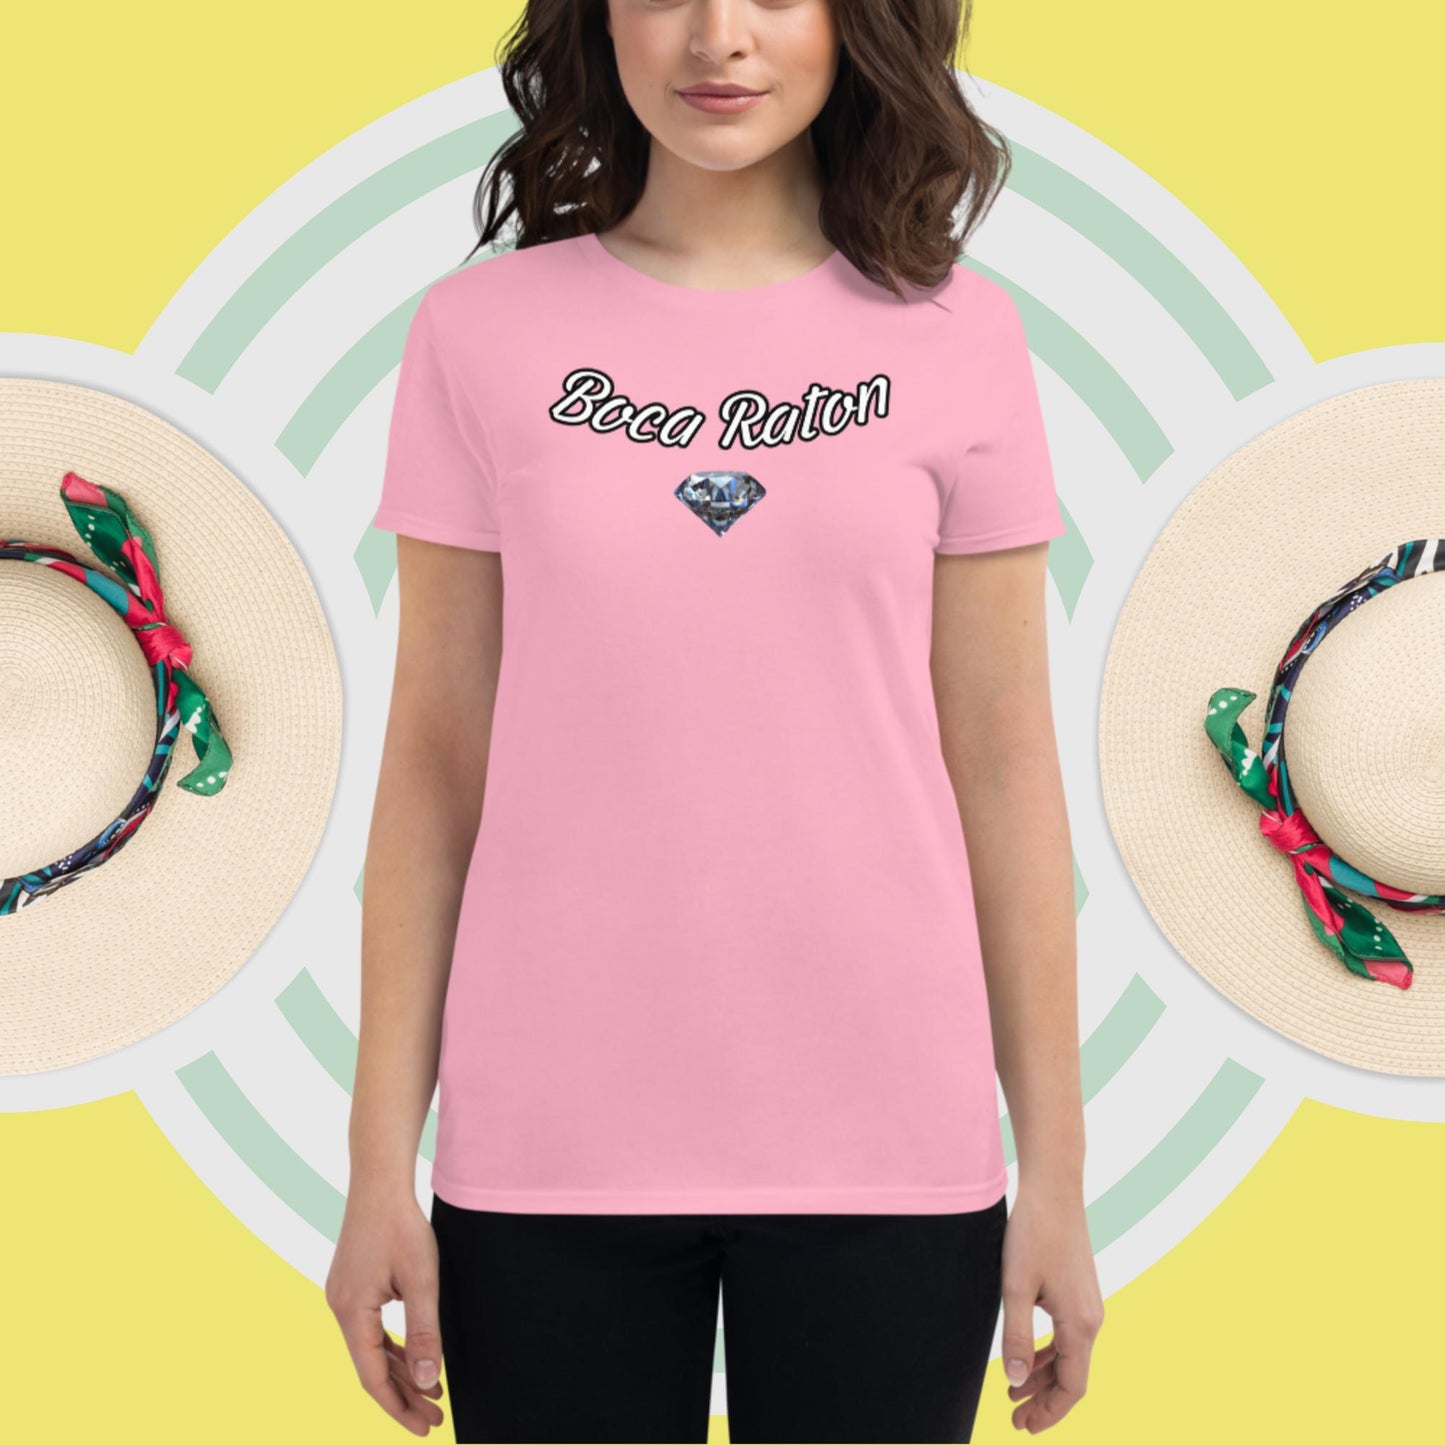 Boca Raton Diamond 954 Collection Women's short sleeve t-shirt